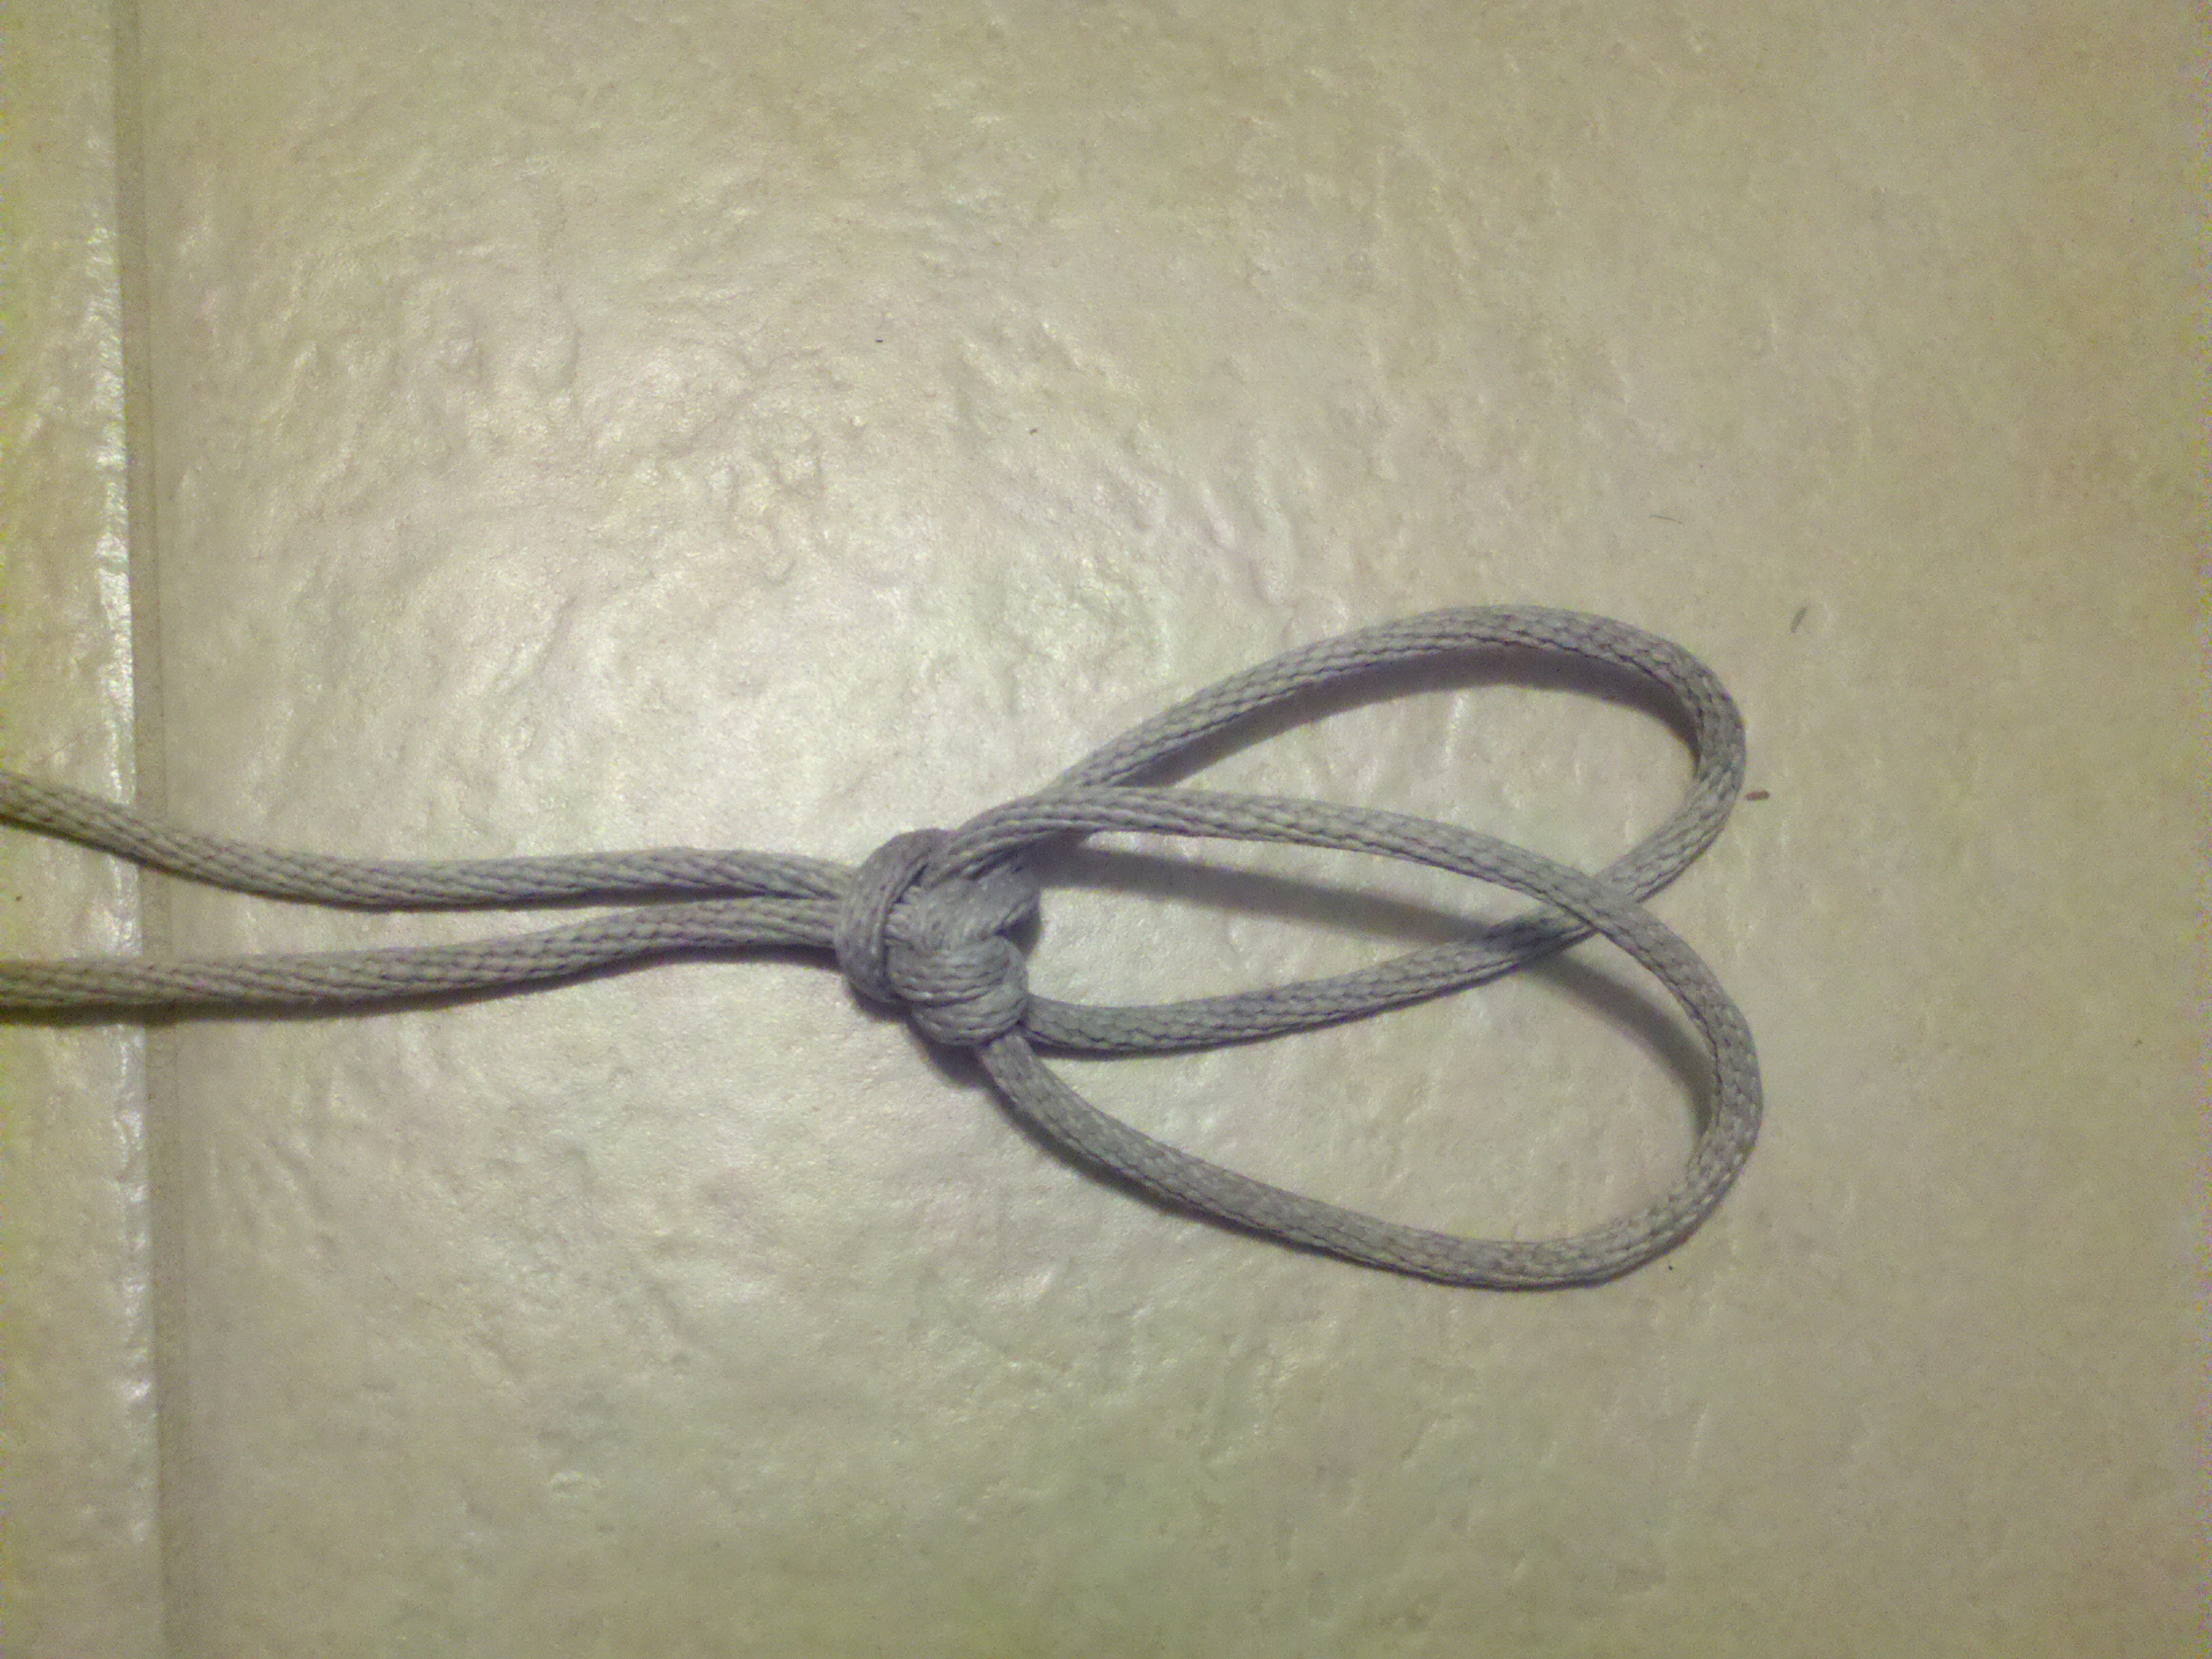 Figure of Eight 8 Loop Knot: Loop Tyer vs. Without Loop Tyer - Which is  Better?